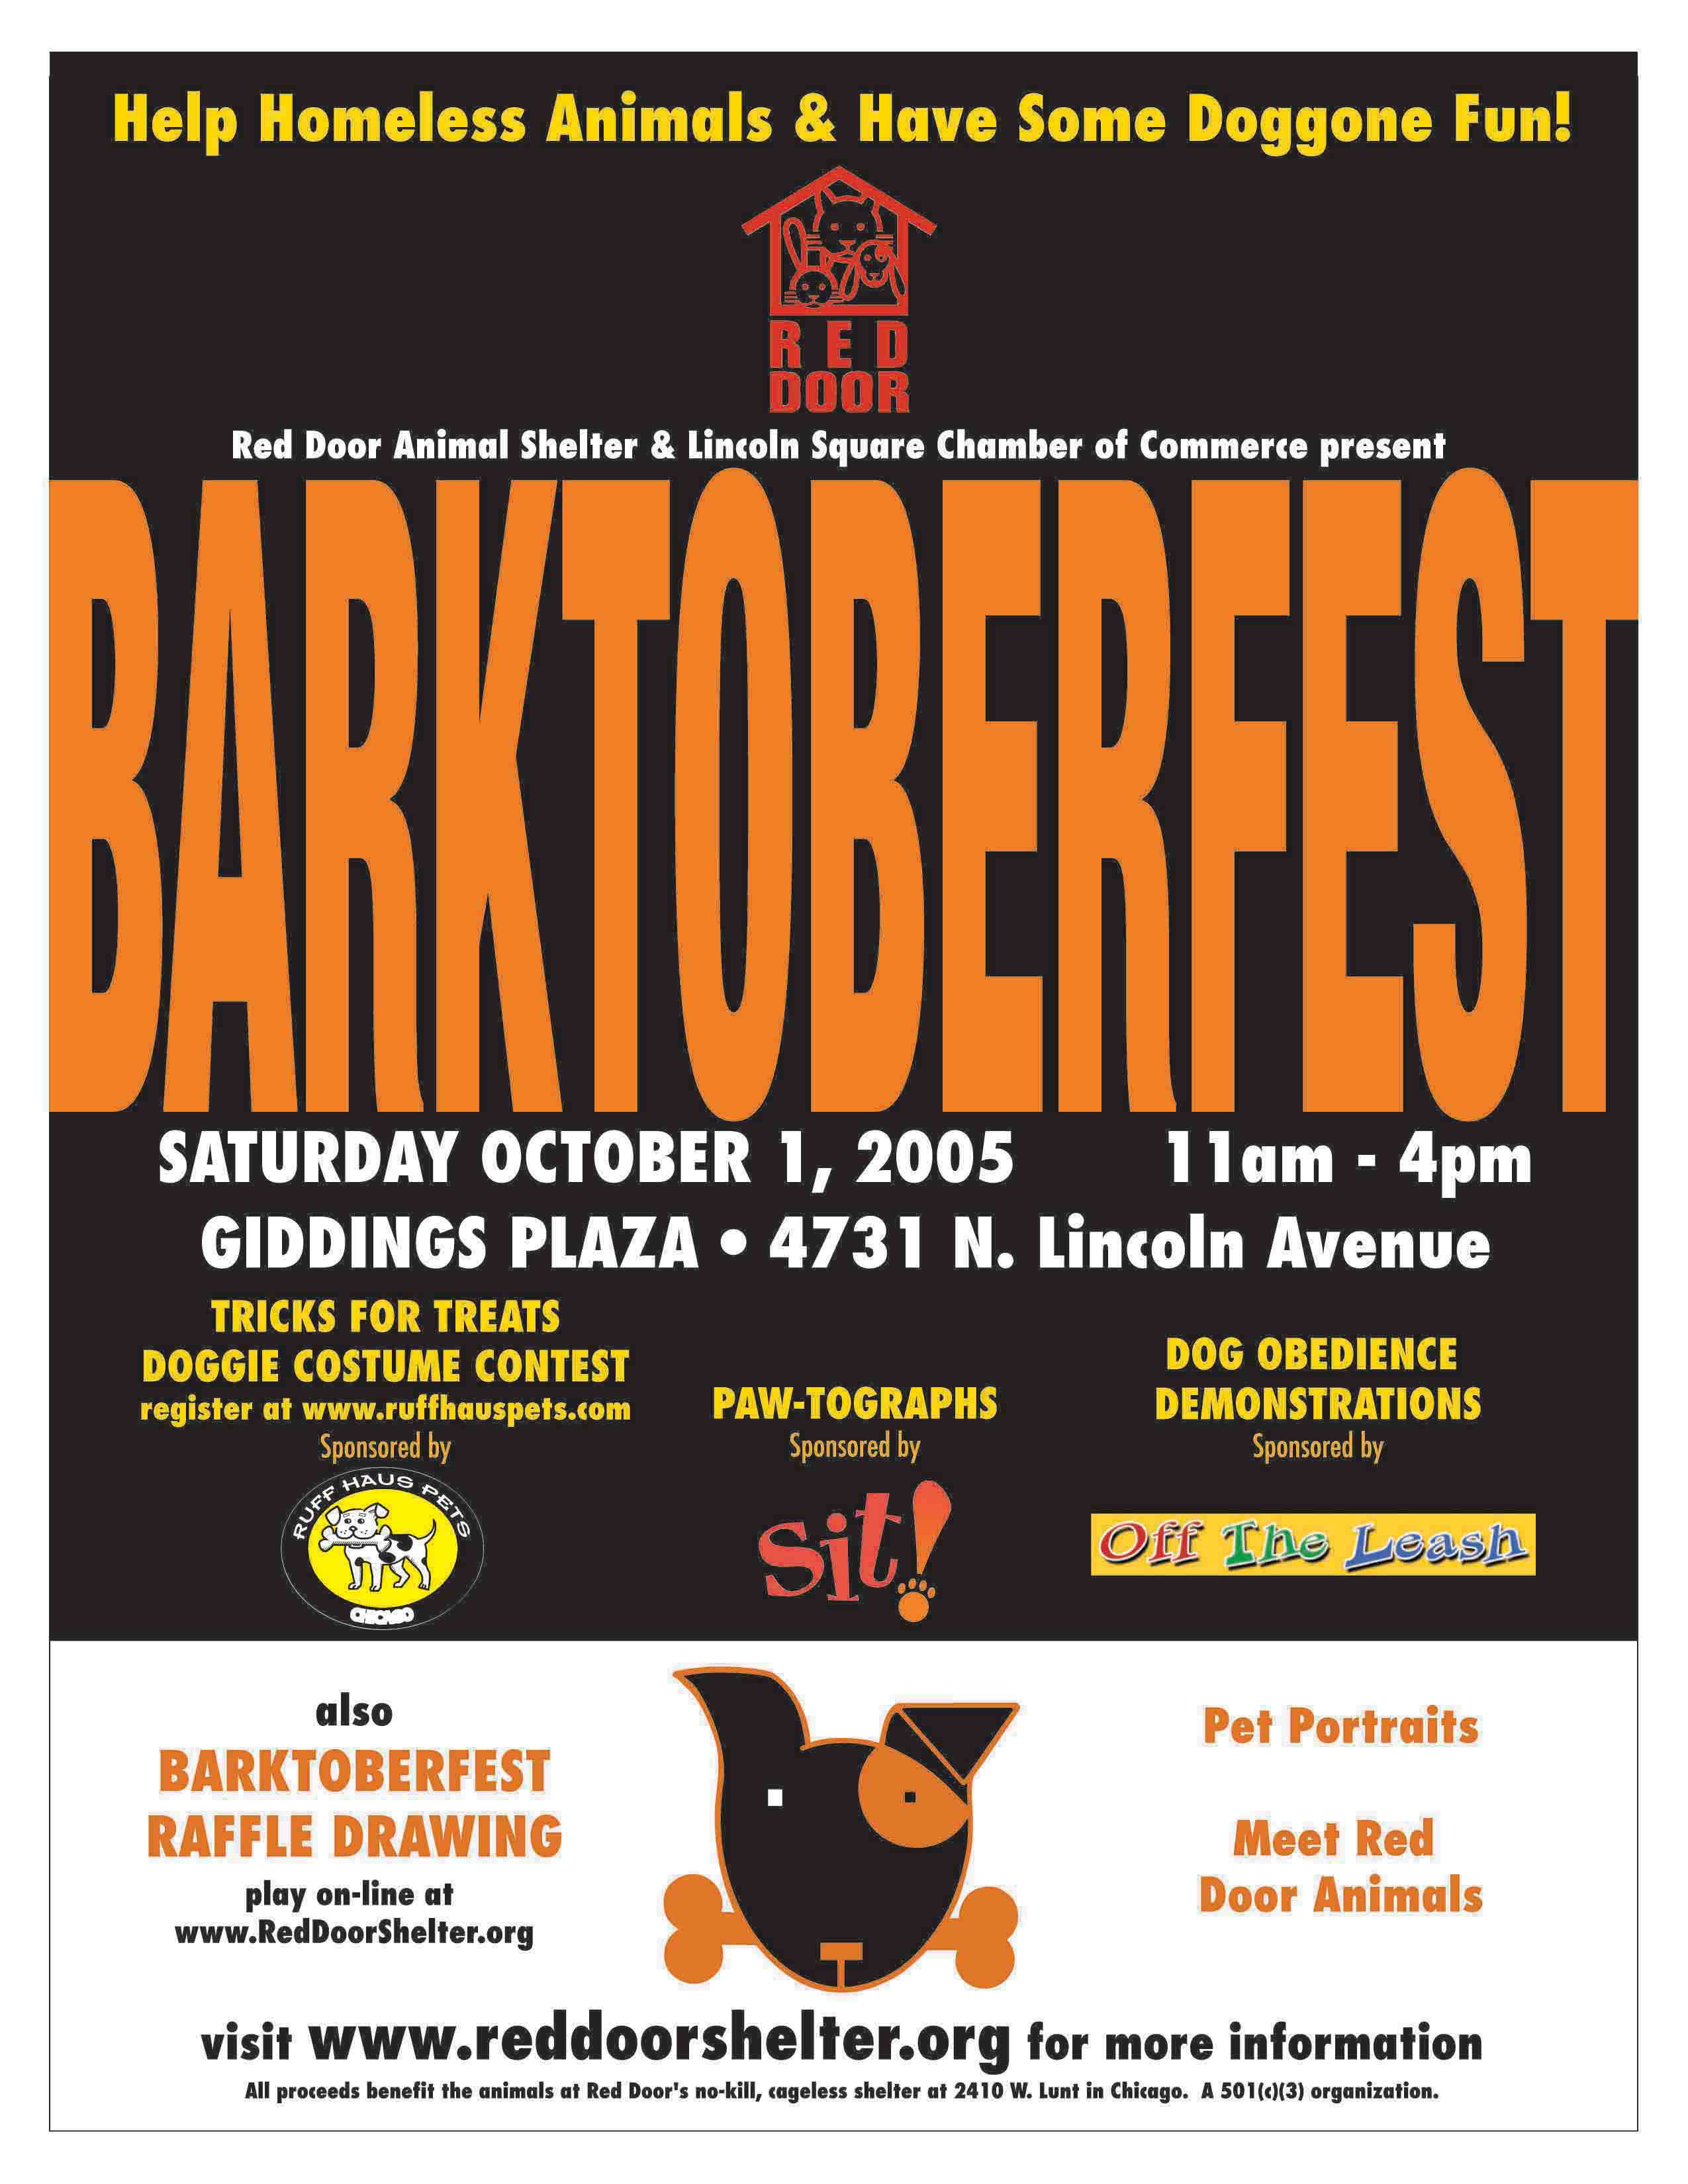 Barktoberfest overview and logo